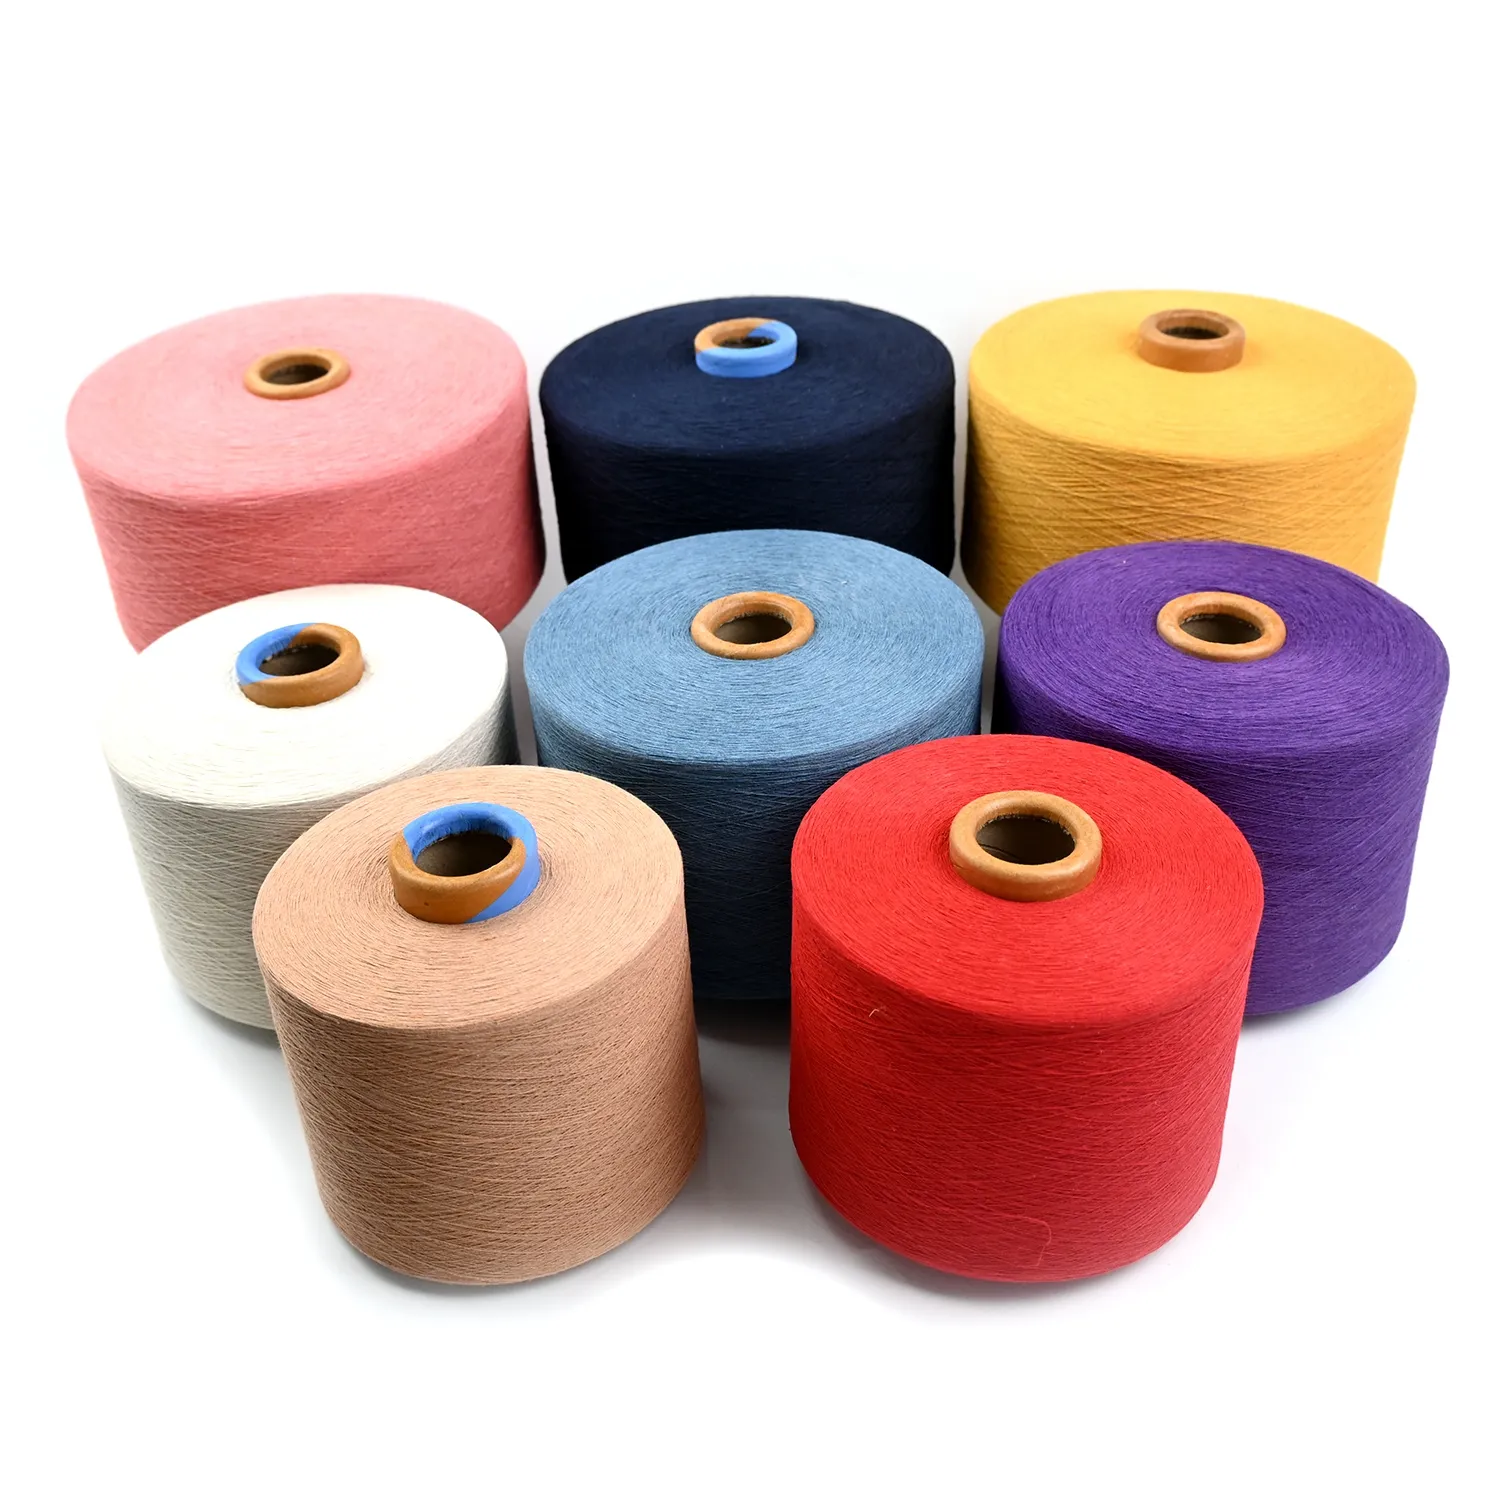 NE6-NE30カスタマイズ可能な混紡糸、ポリエステル綿糸